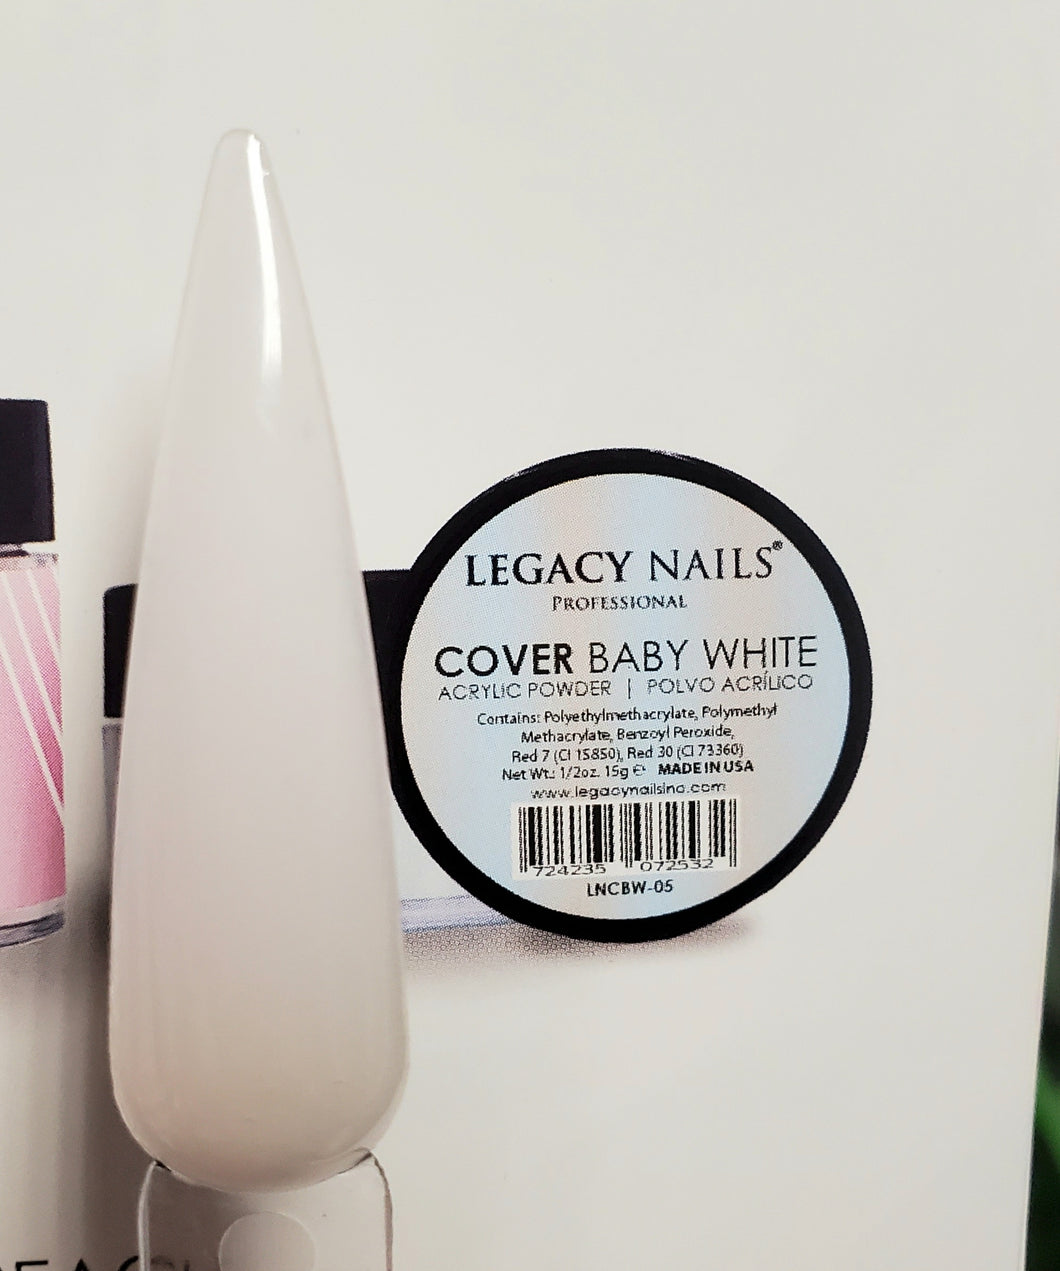 Legacy nails Cover baby white (milky white) acrylic powder